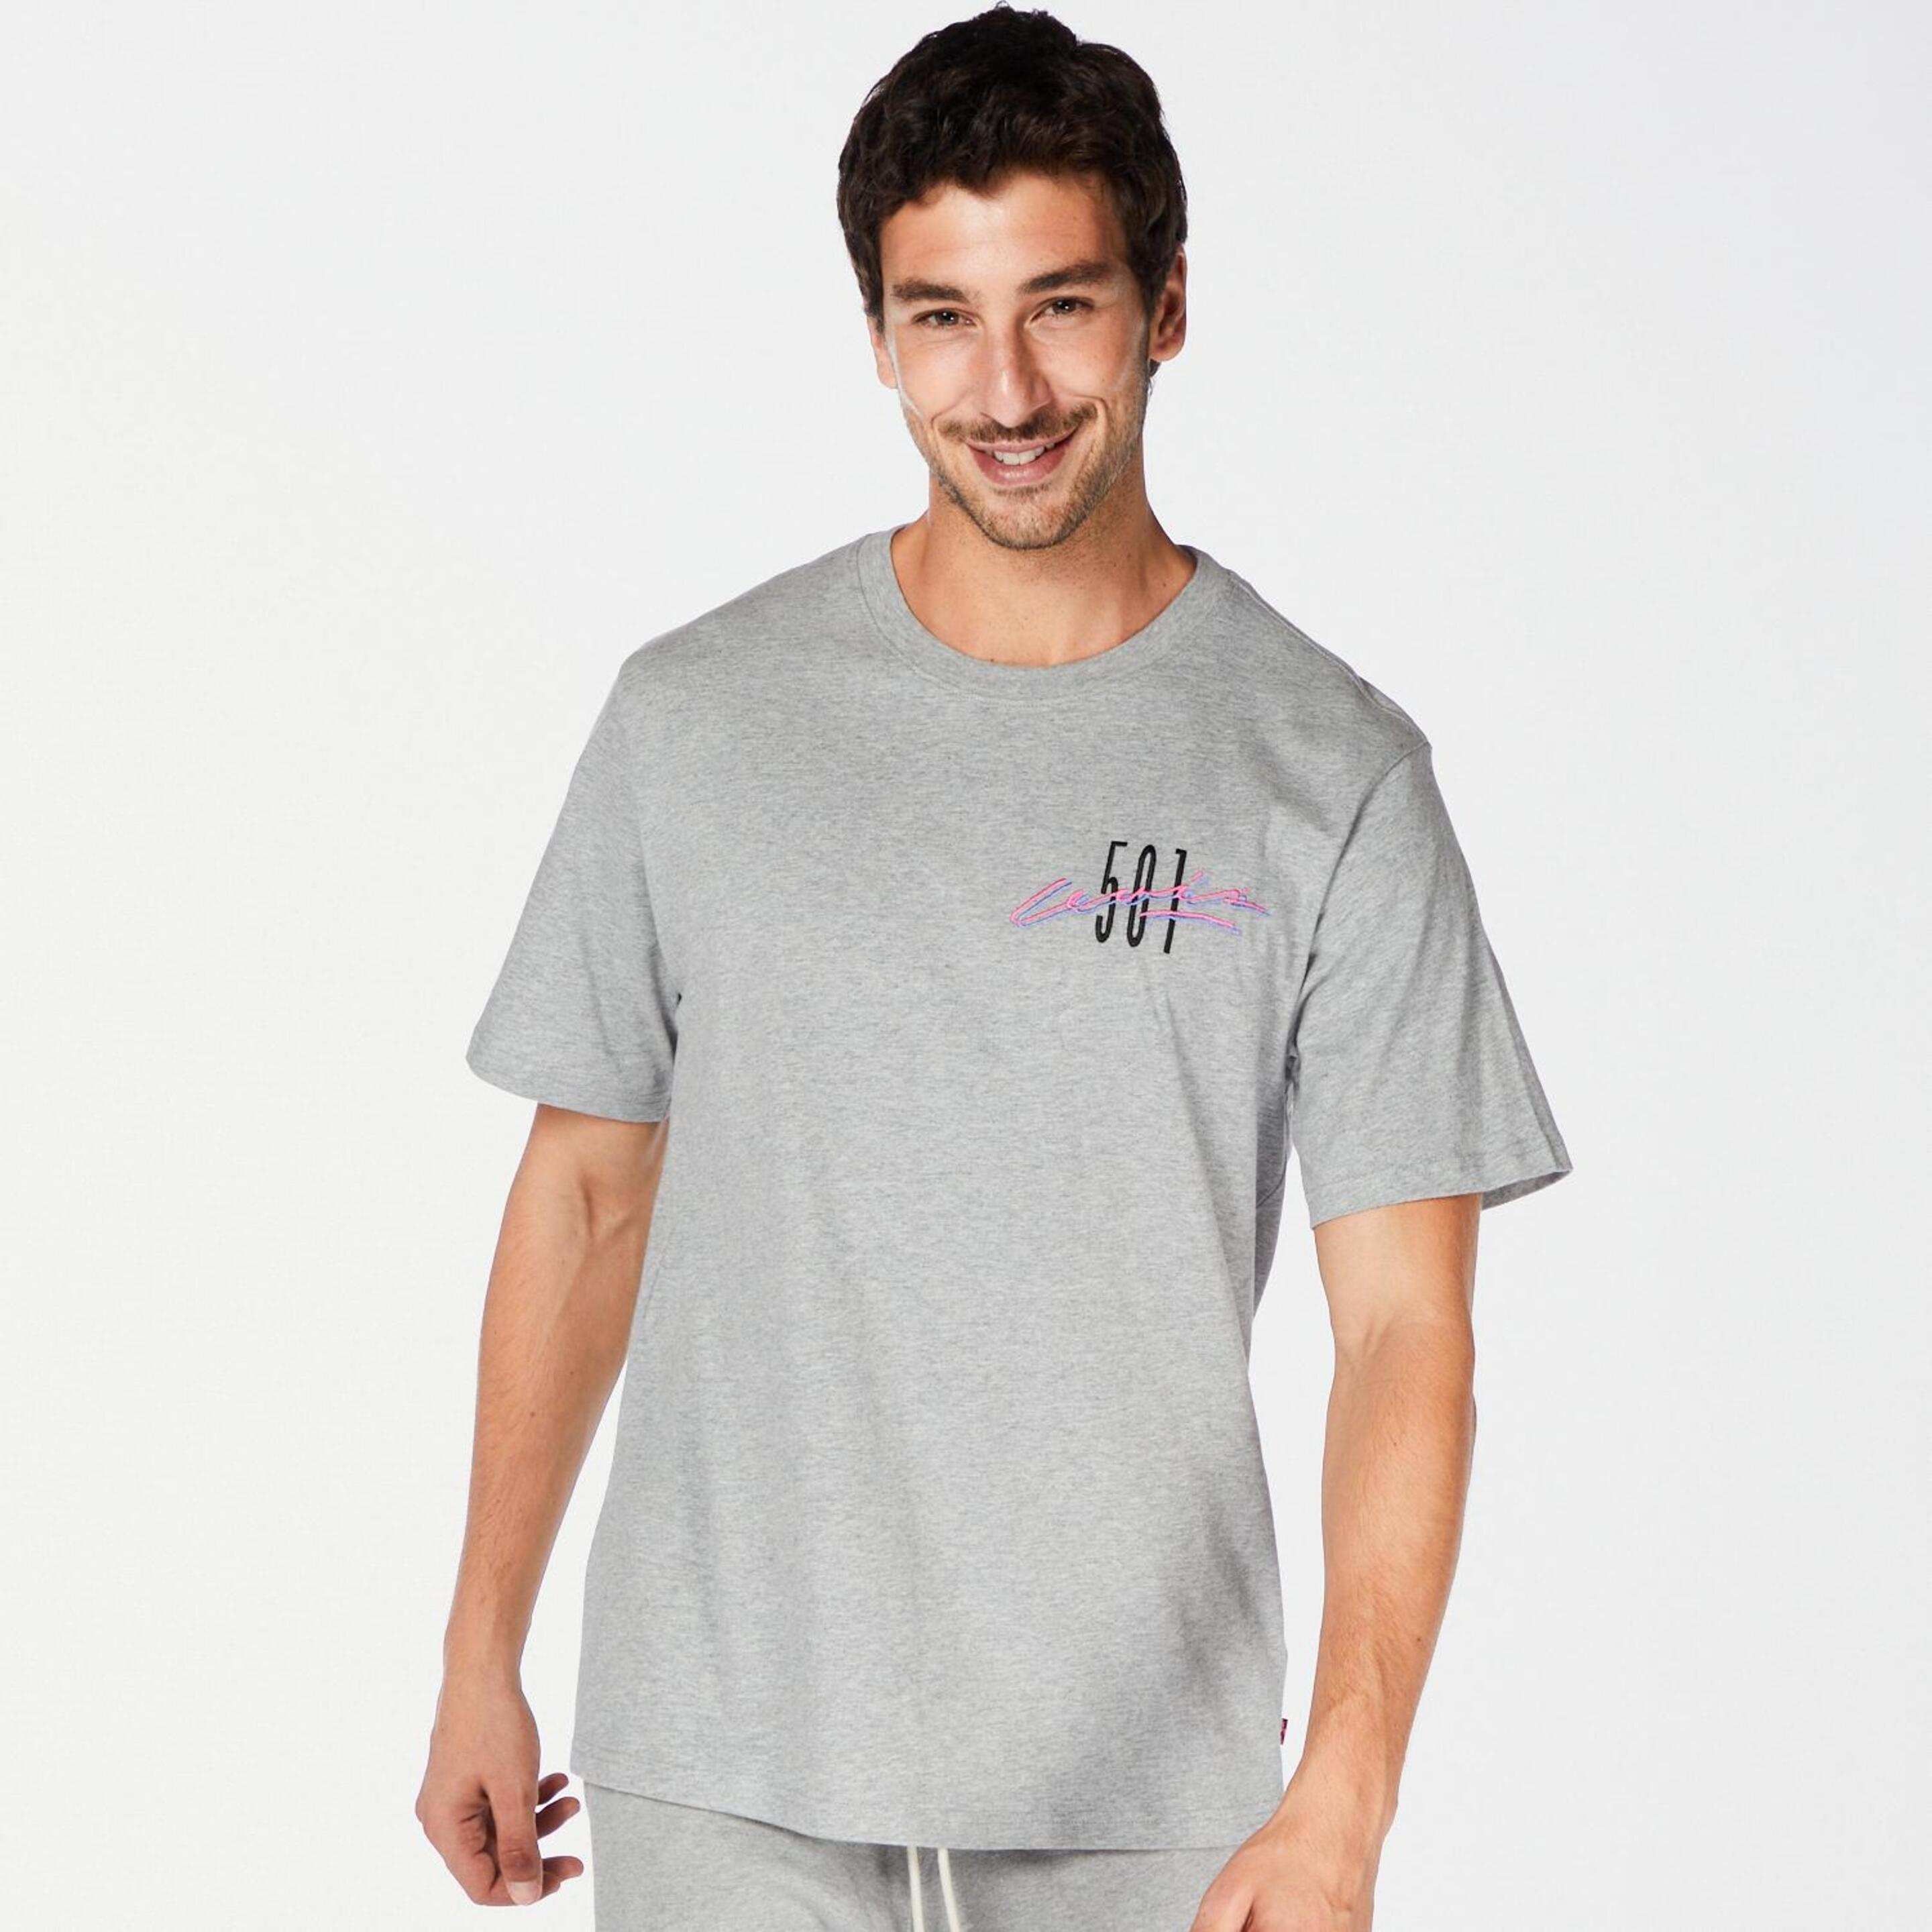 Levi's 501 - gris - Camiseta Hombre